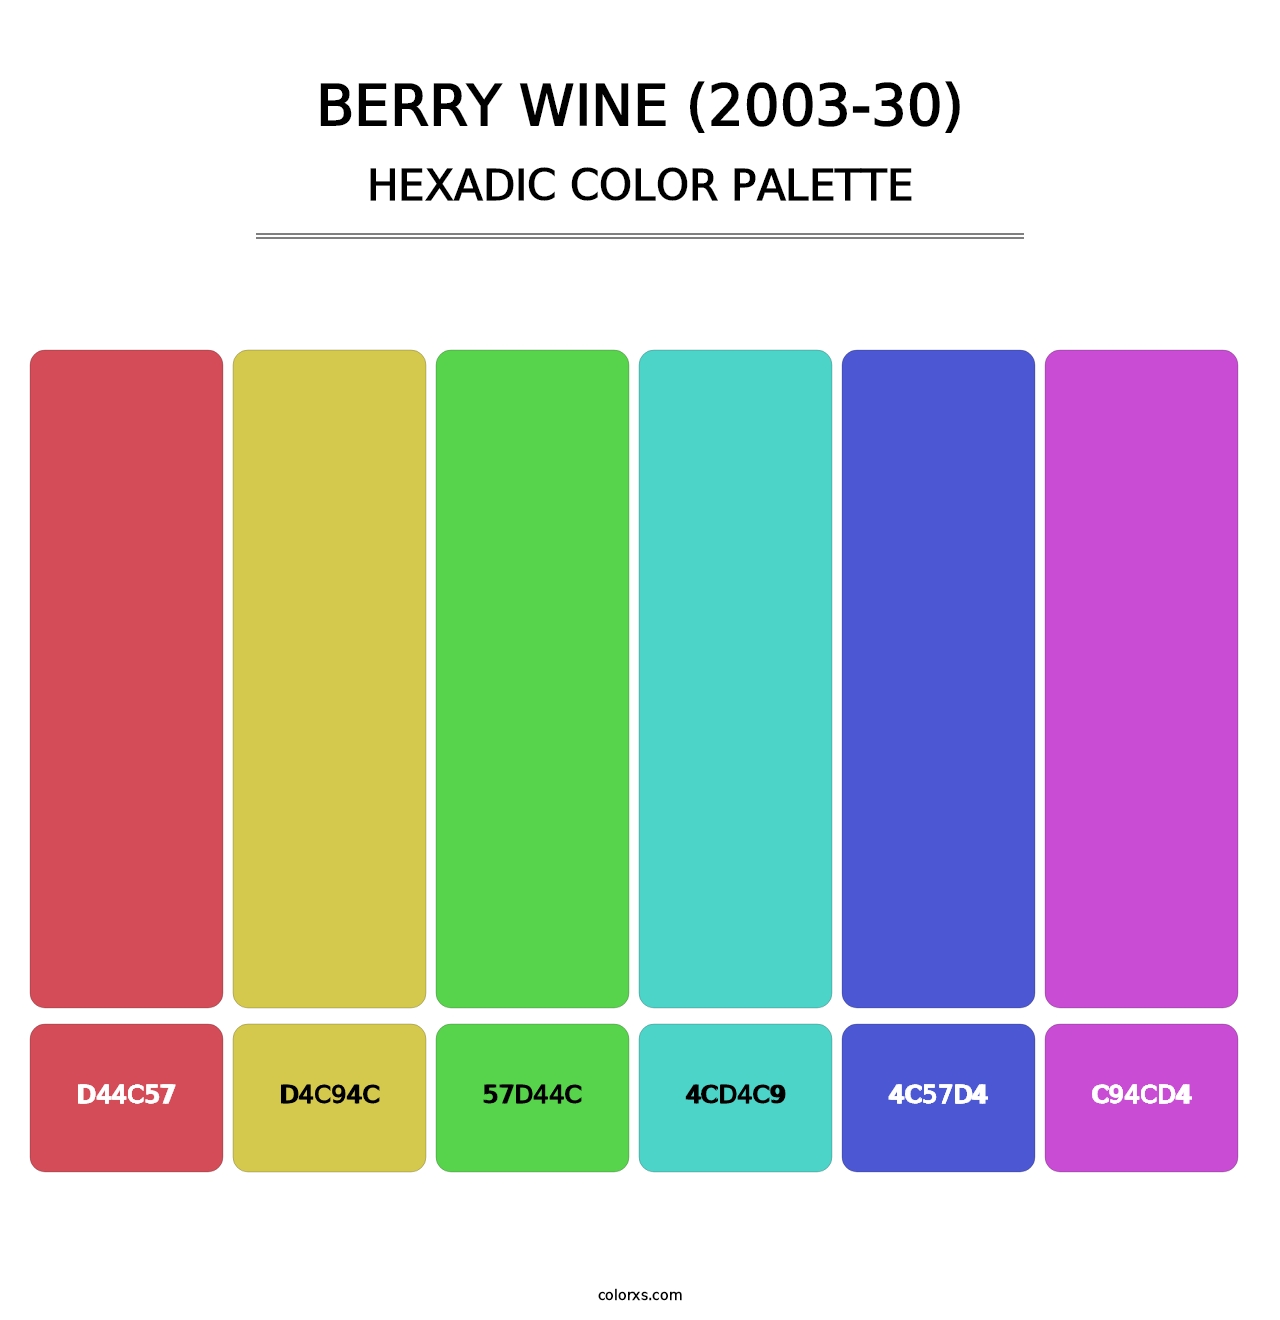 Berry Wine (2003-30) - Hexadic Color Palette